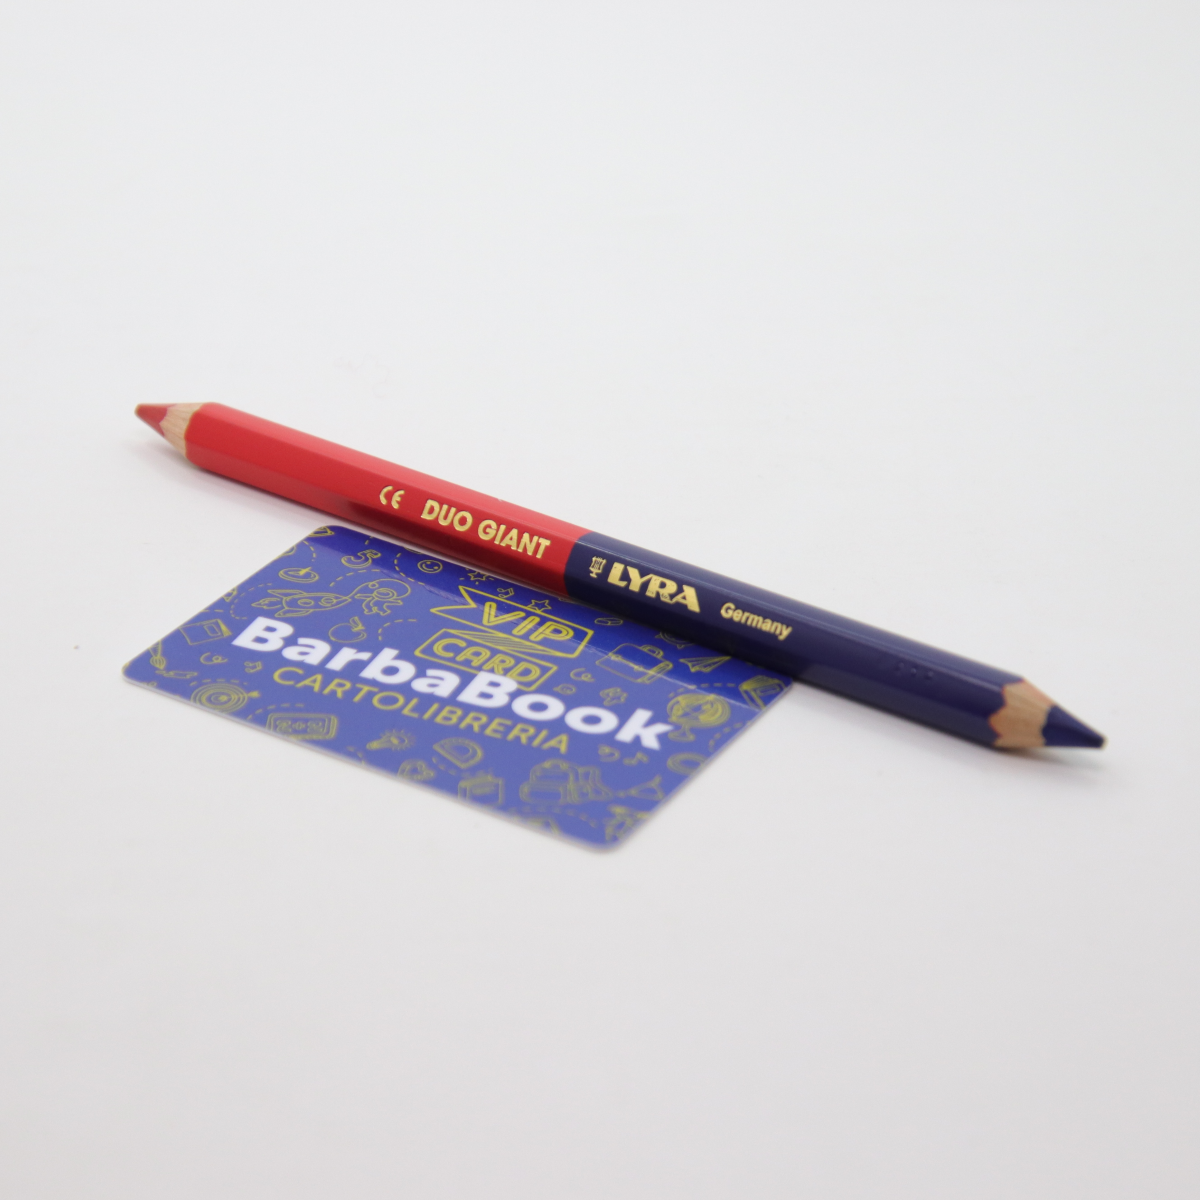 Una fila di matite colorate con una rossa e una blu.